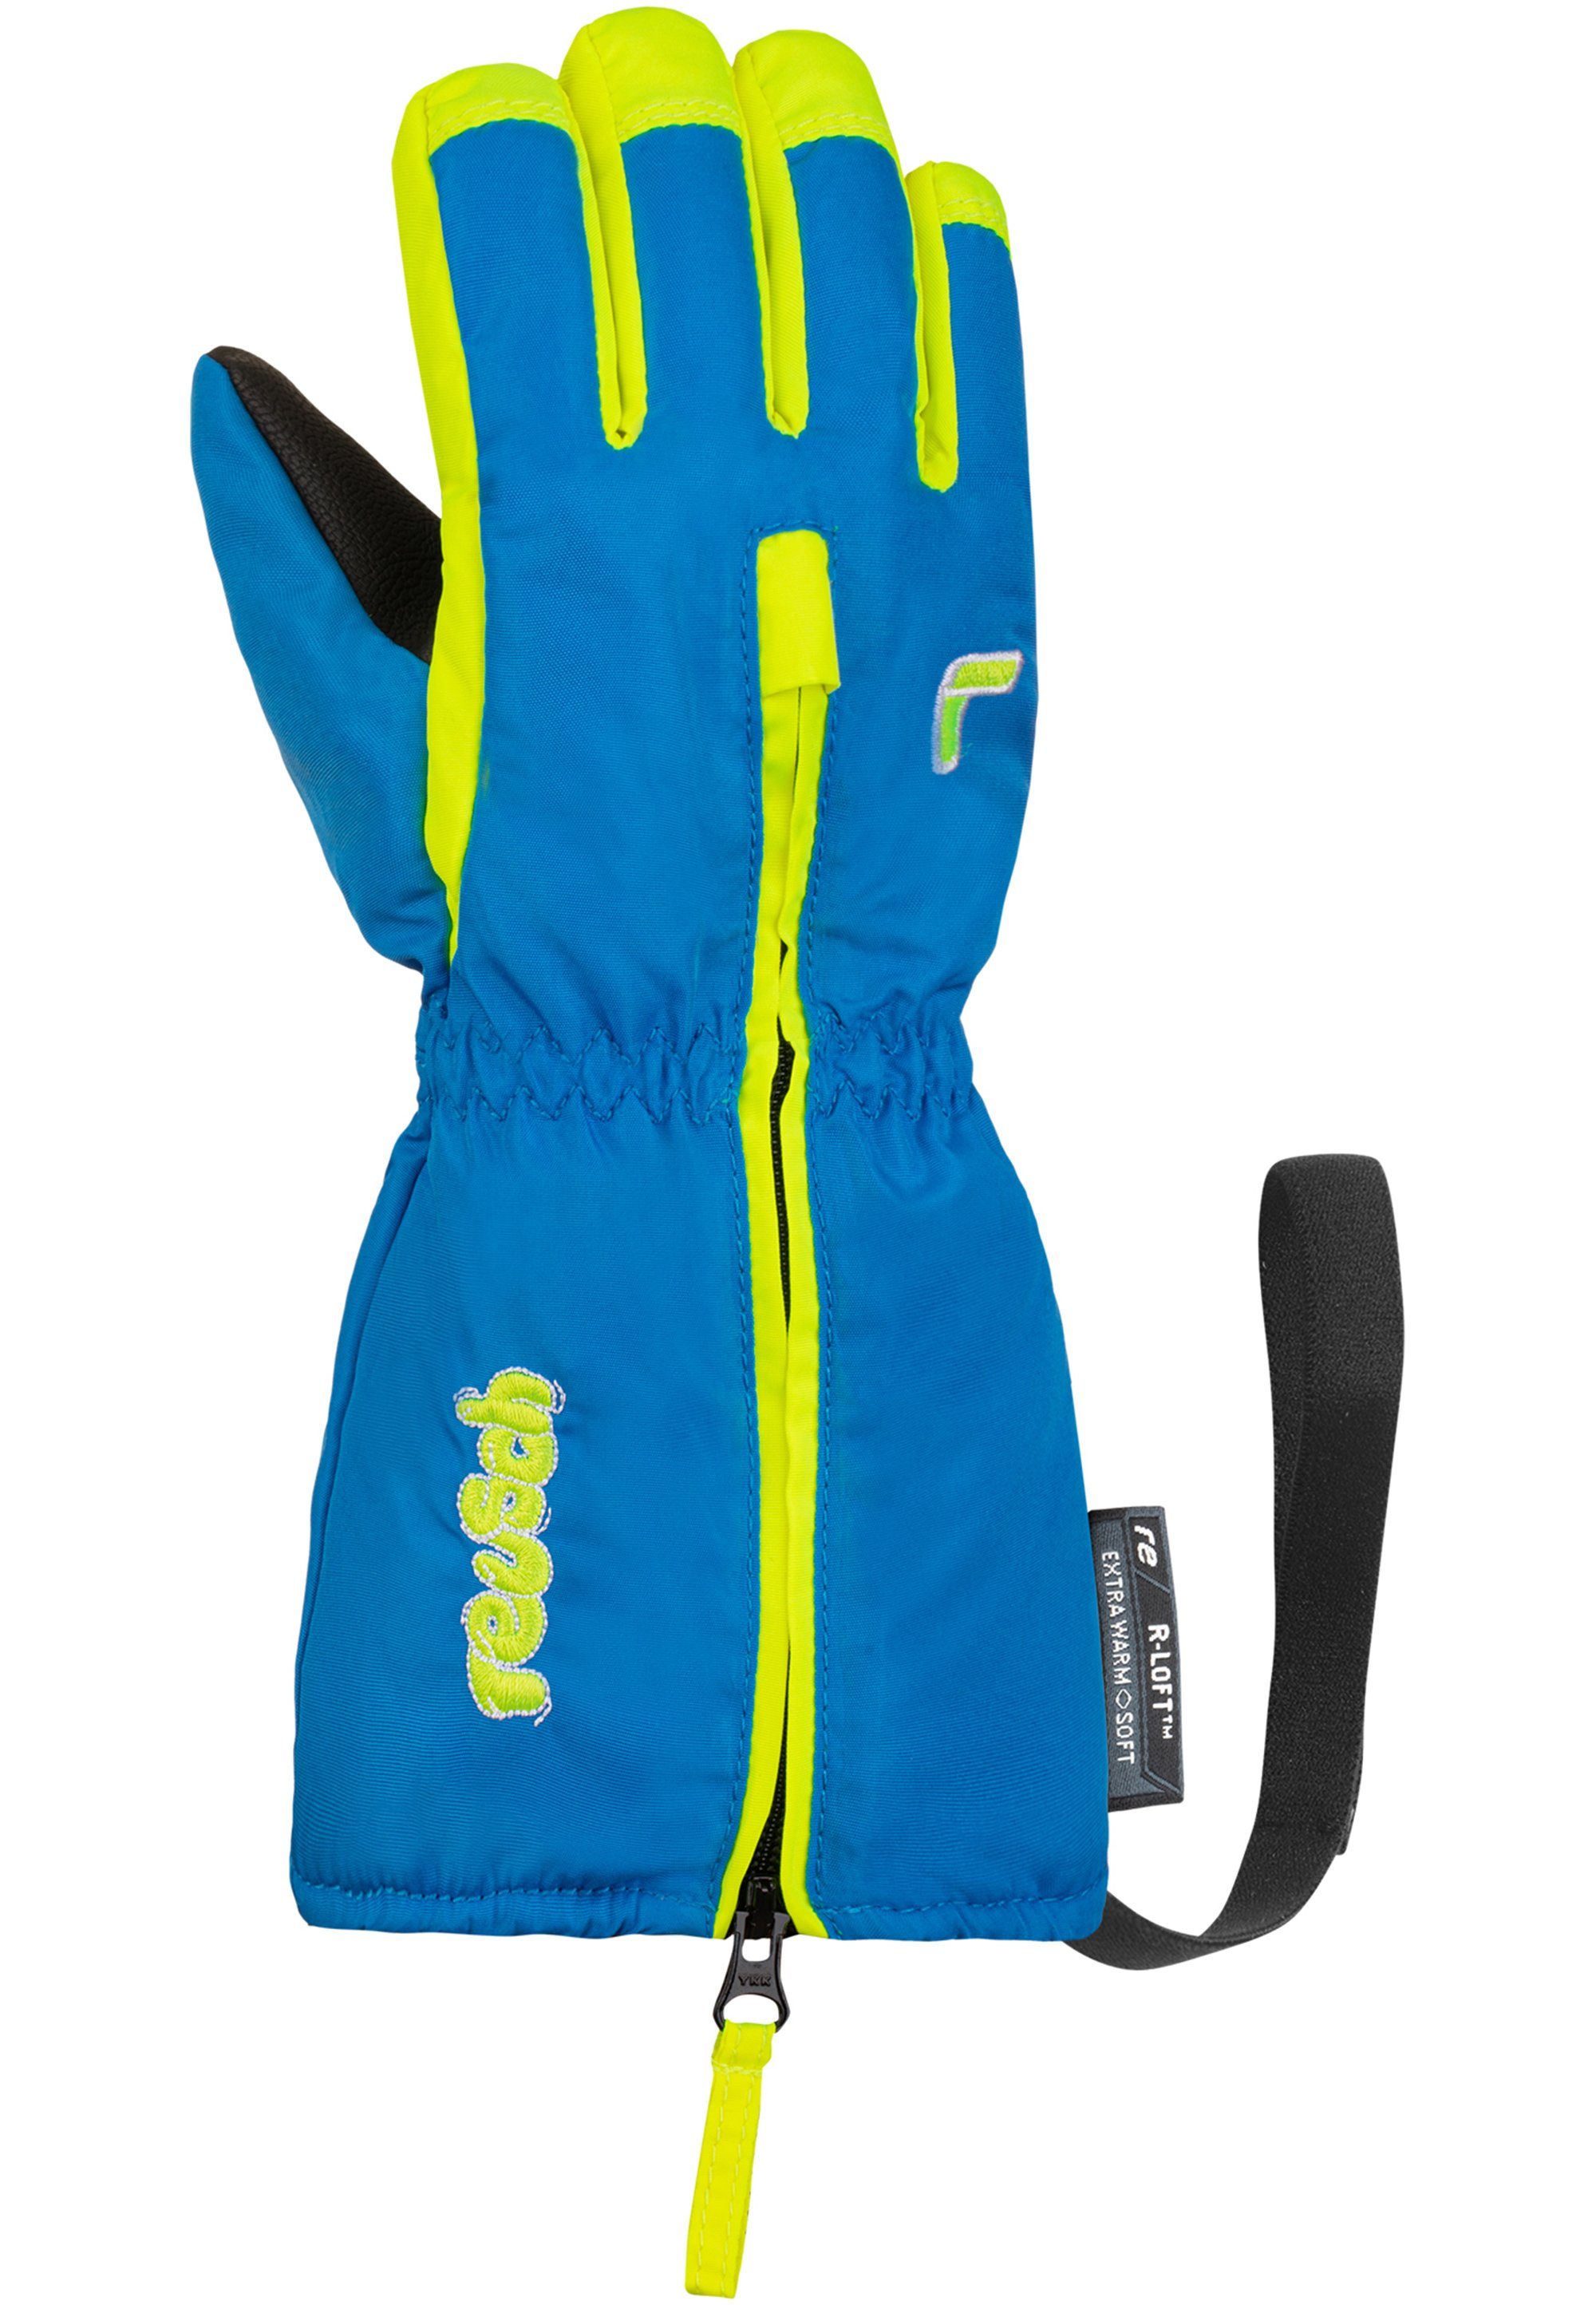 Stulpe Reusch mit Skihandschuhe langer Tom gelb-blau